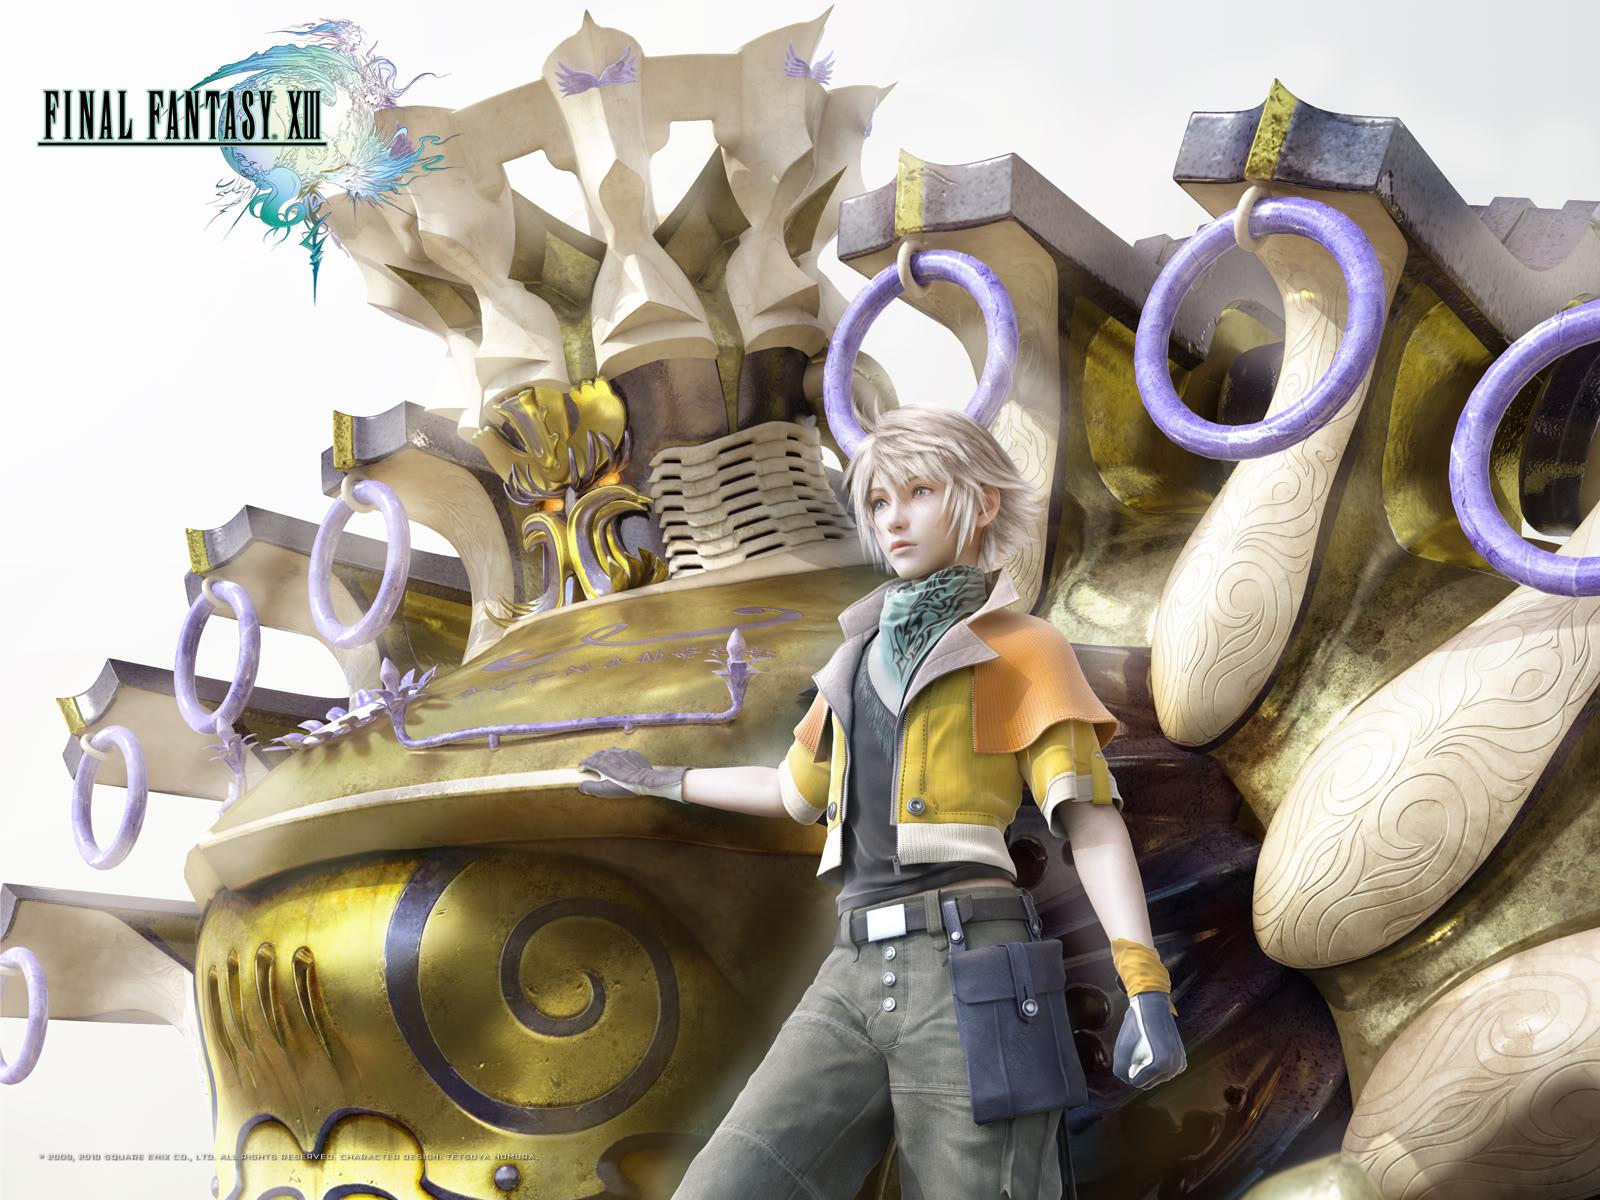 Wallpaper Final Fantasy Final Fantasy XIII Games 1600x1200 vdeo game